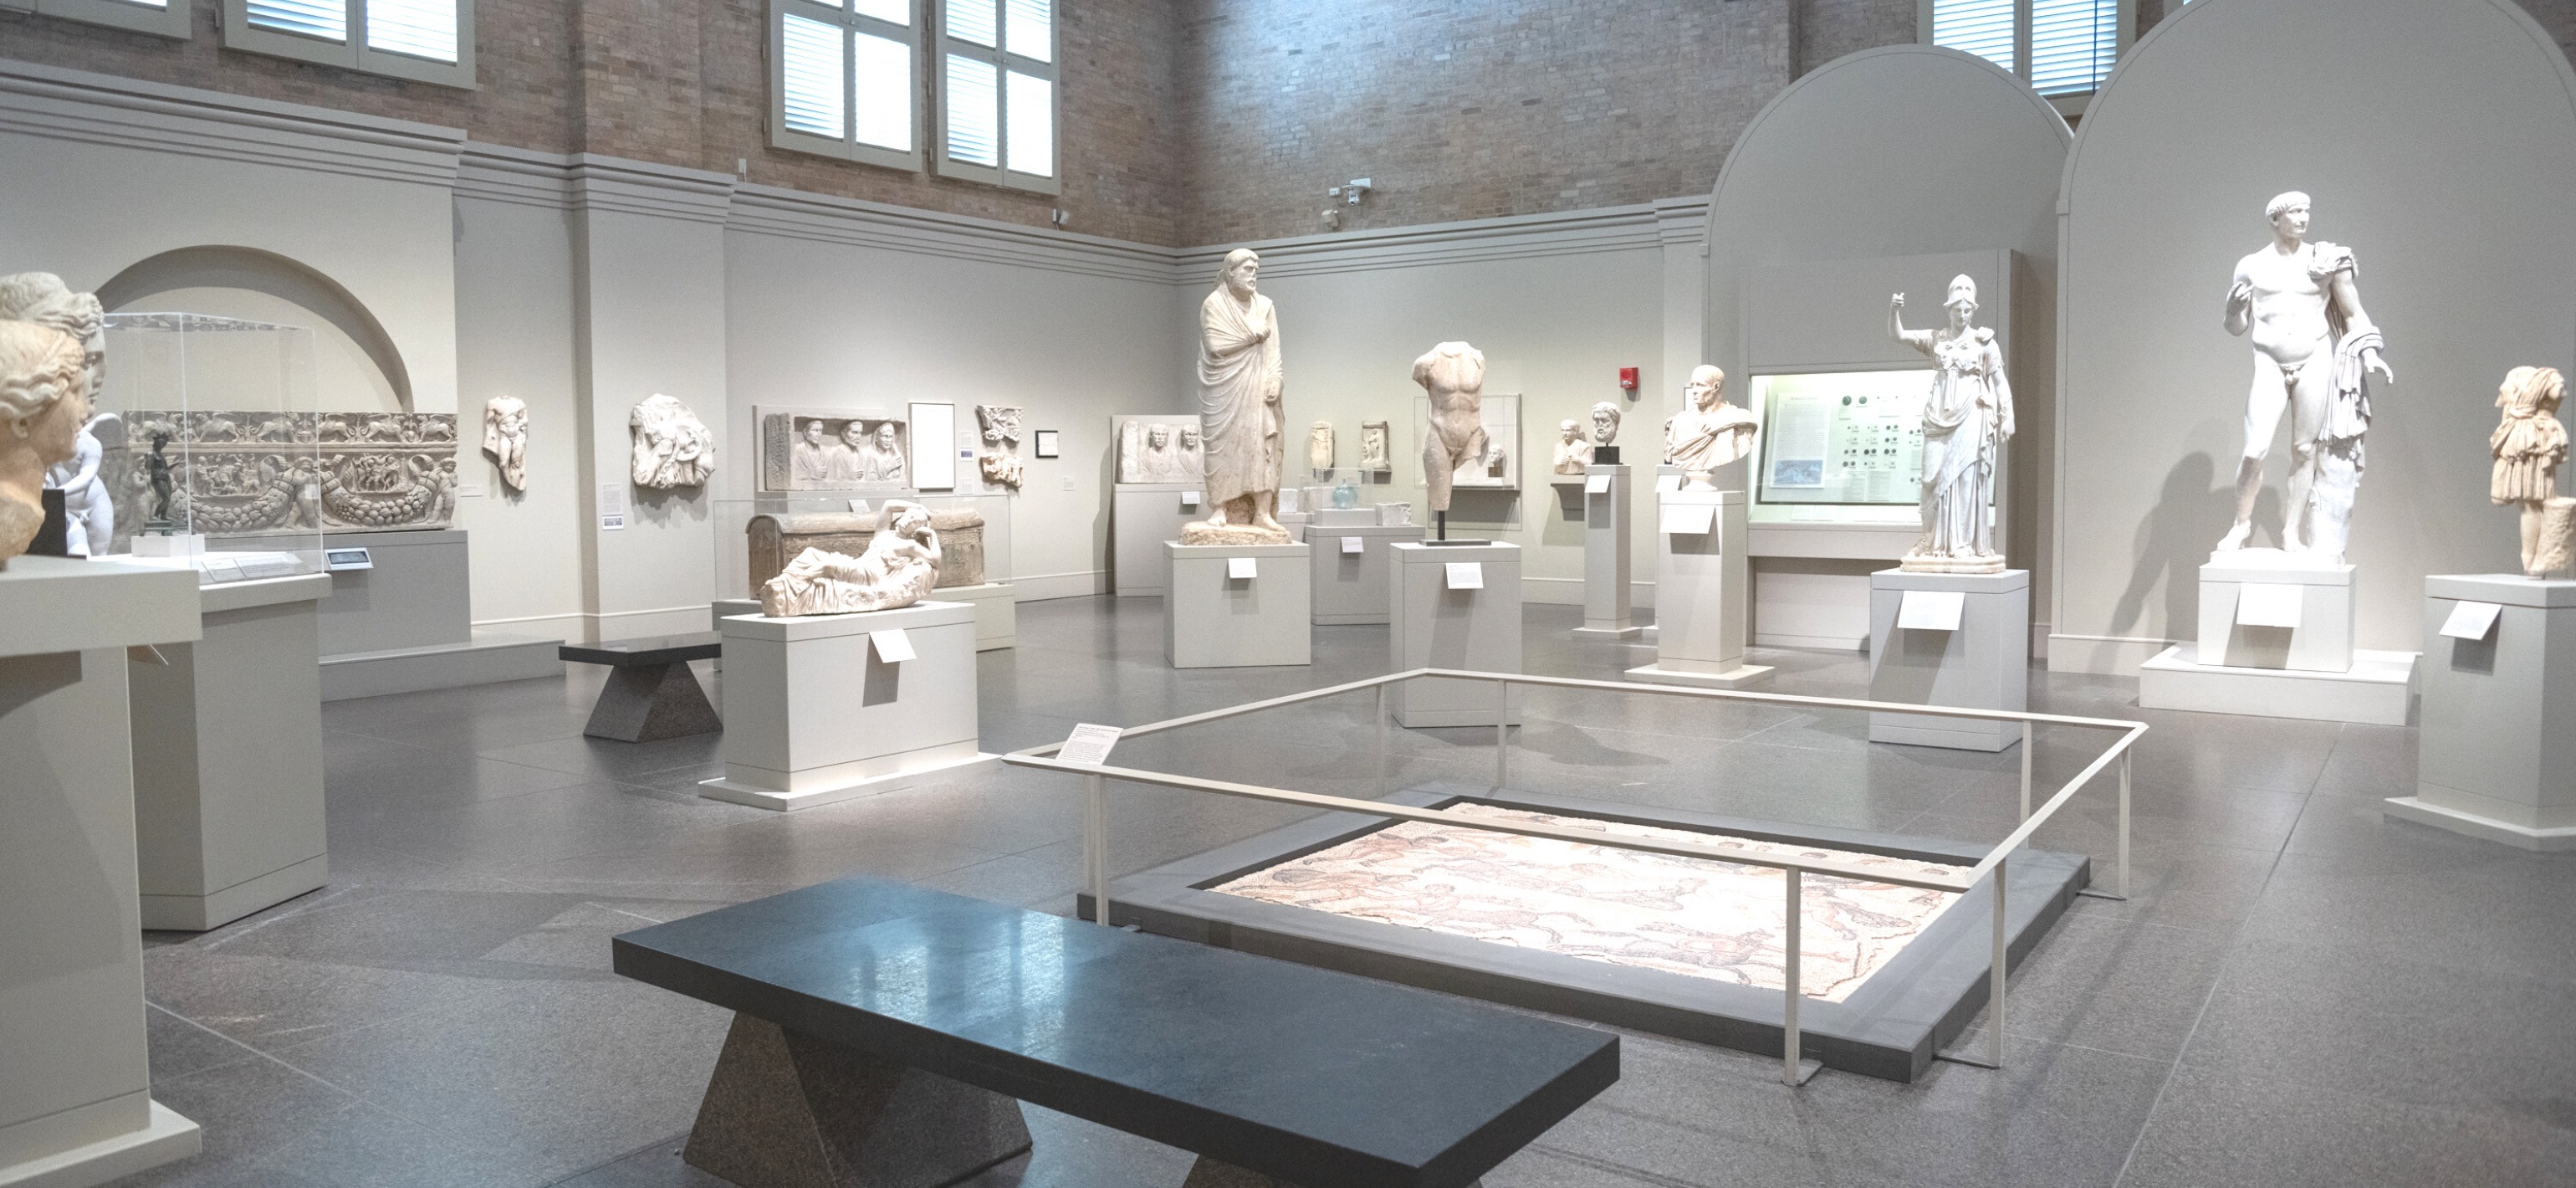 statue roman art gallery image at sama